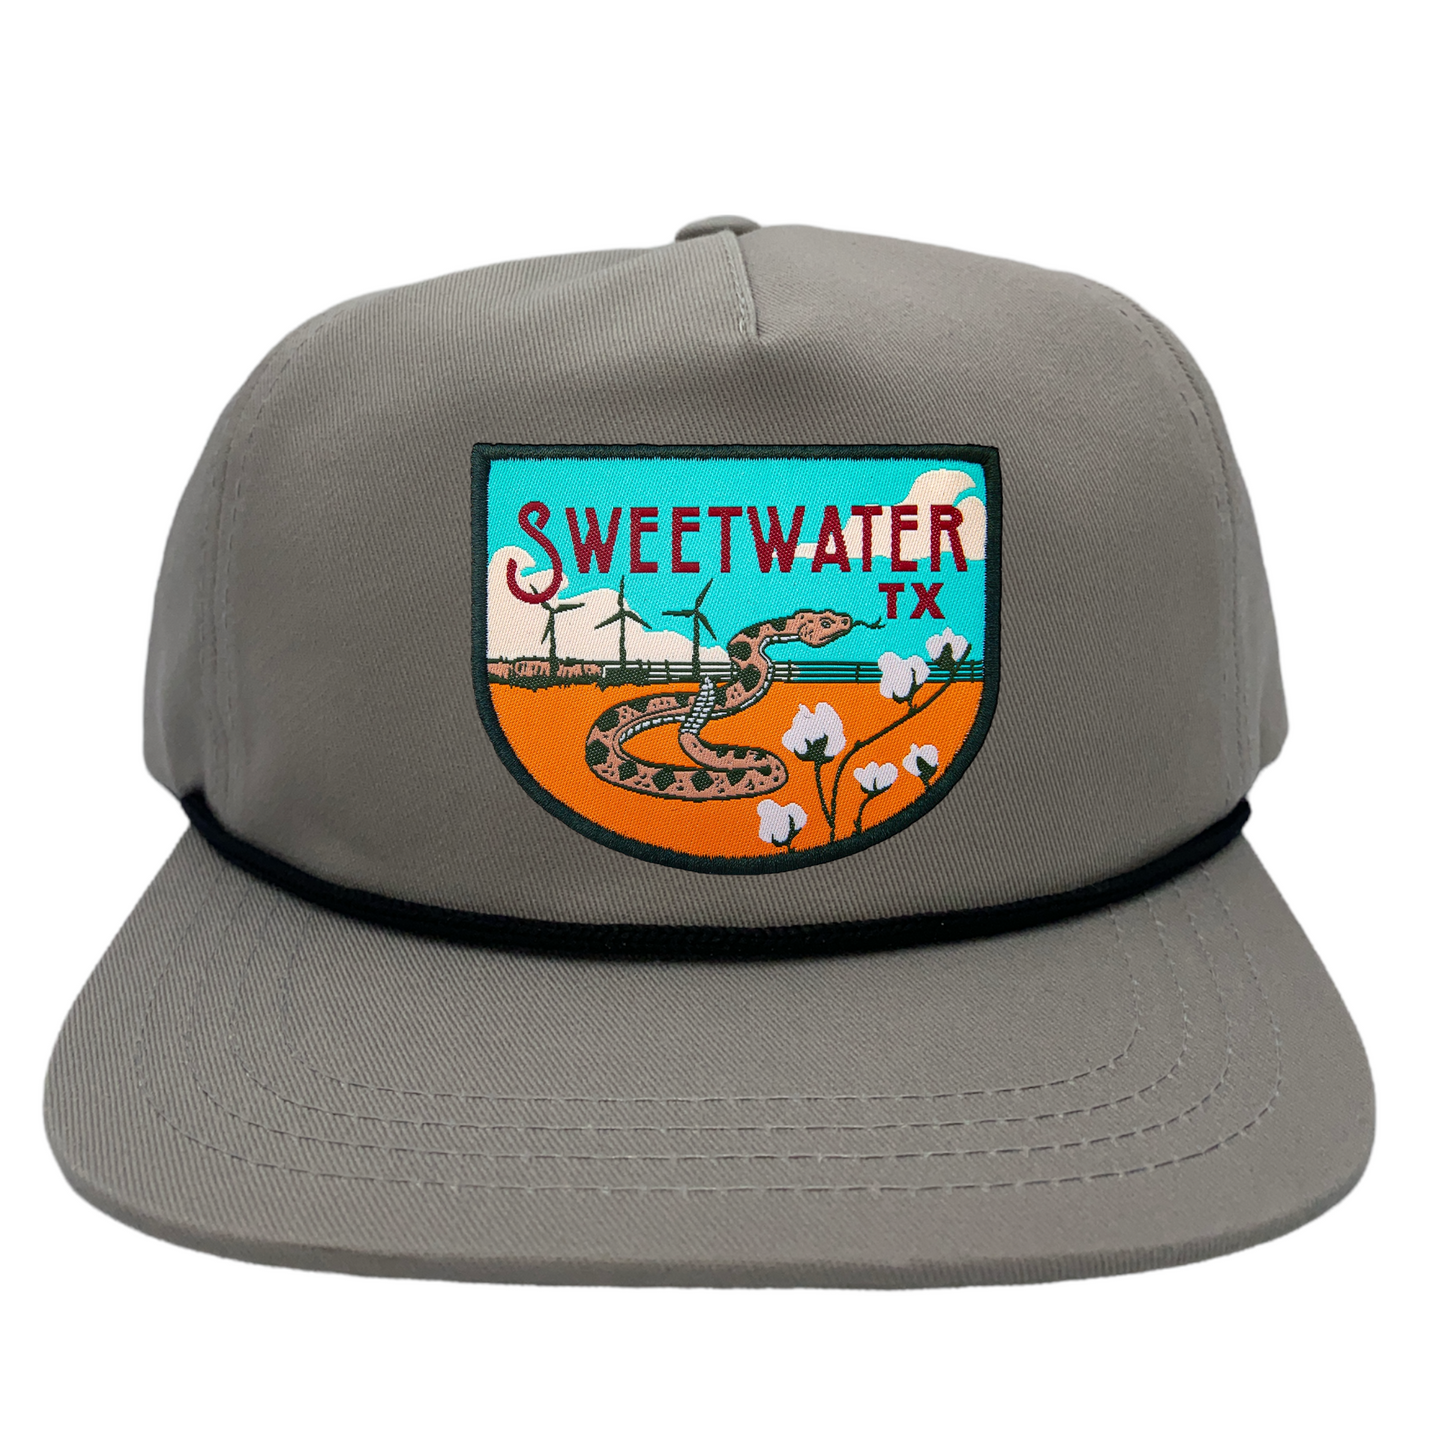 Sweetwater, TX Kids Snapback